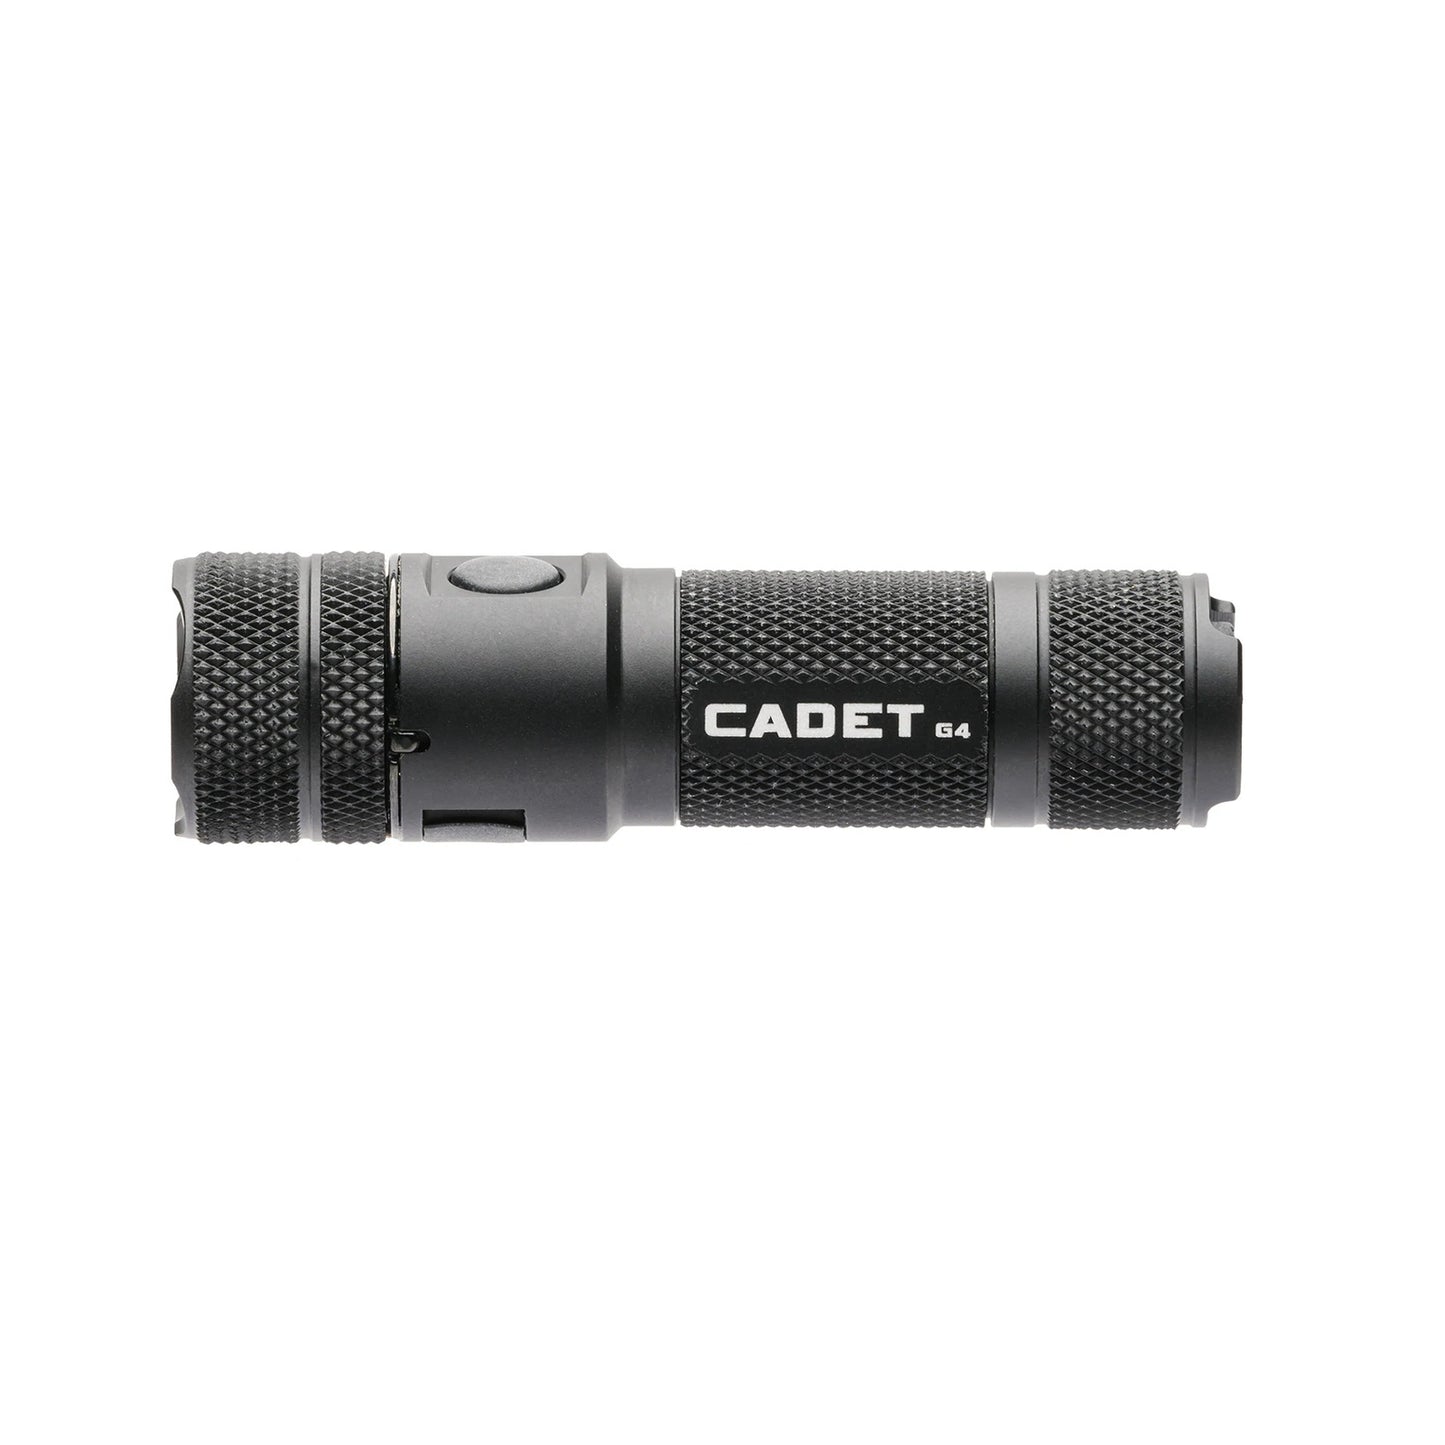 PowerTac Cadet-G4 1200 Lumen LED Flashlight